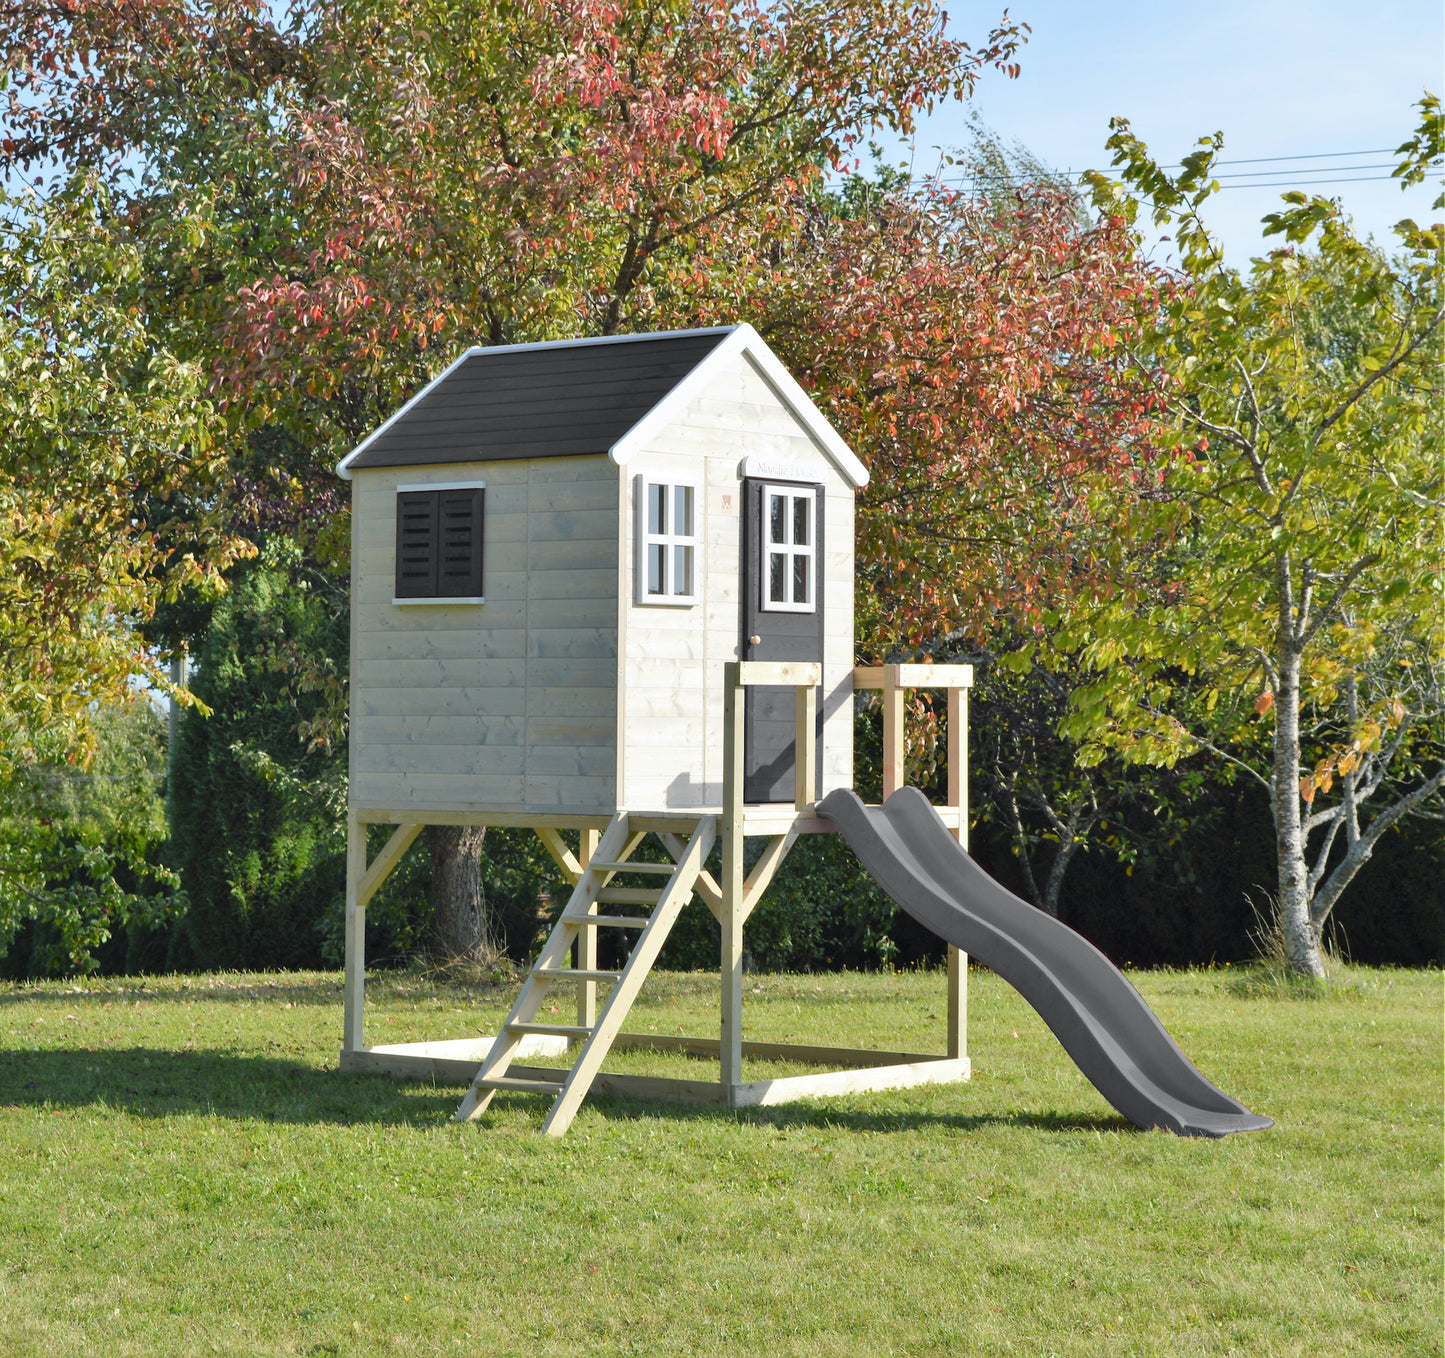 M22G Garden playhouse with slide